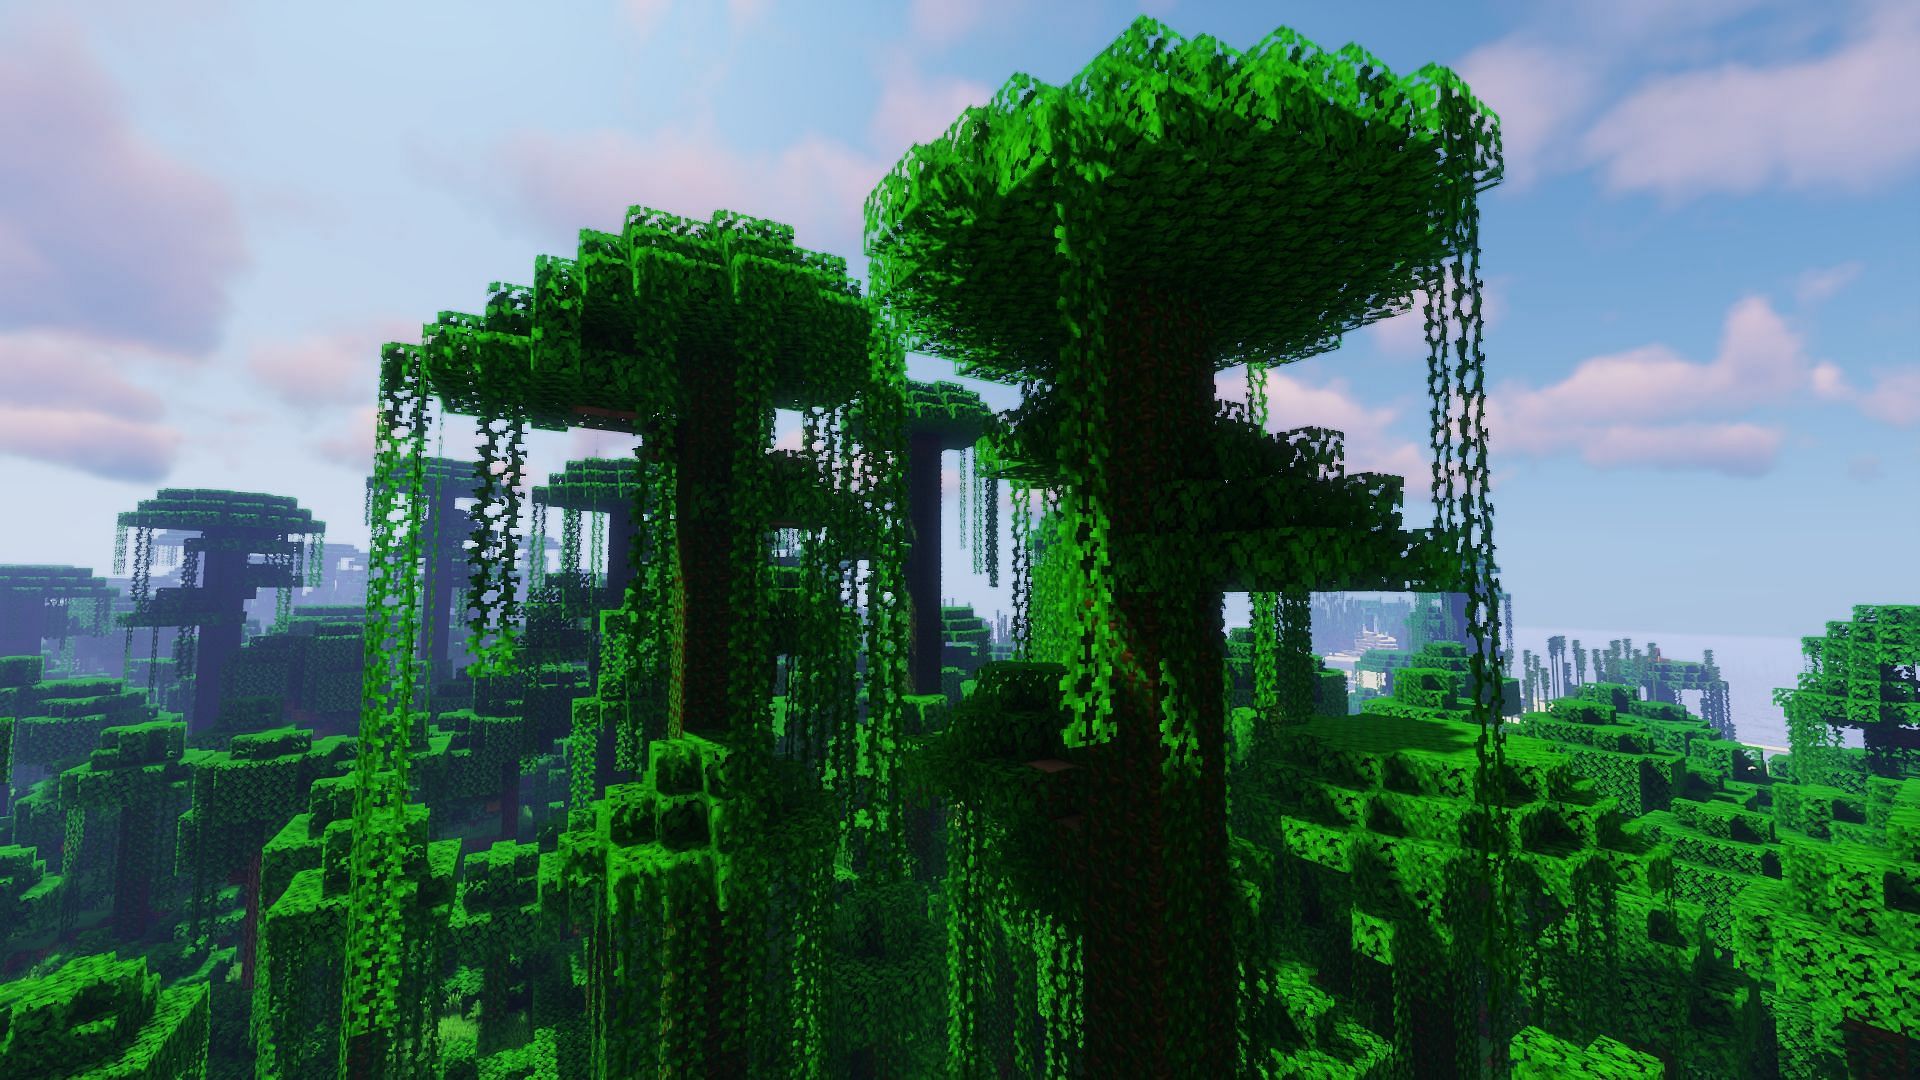 Vines growing over large jungle trees (Image via Minecraft)